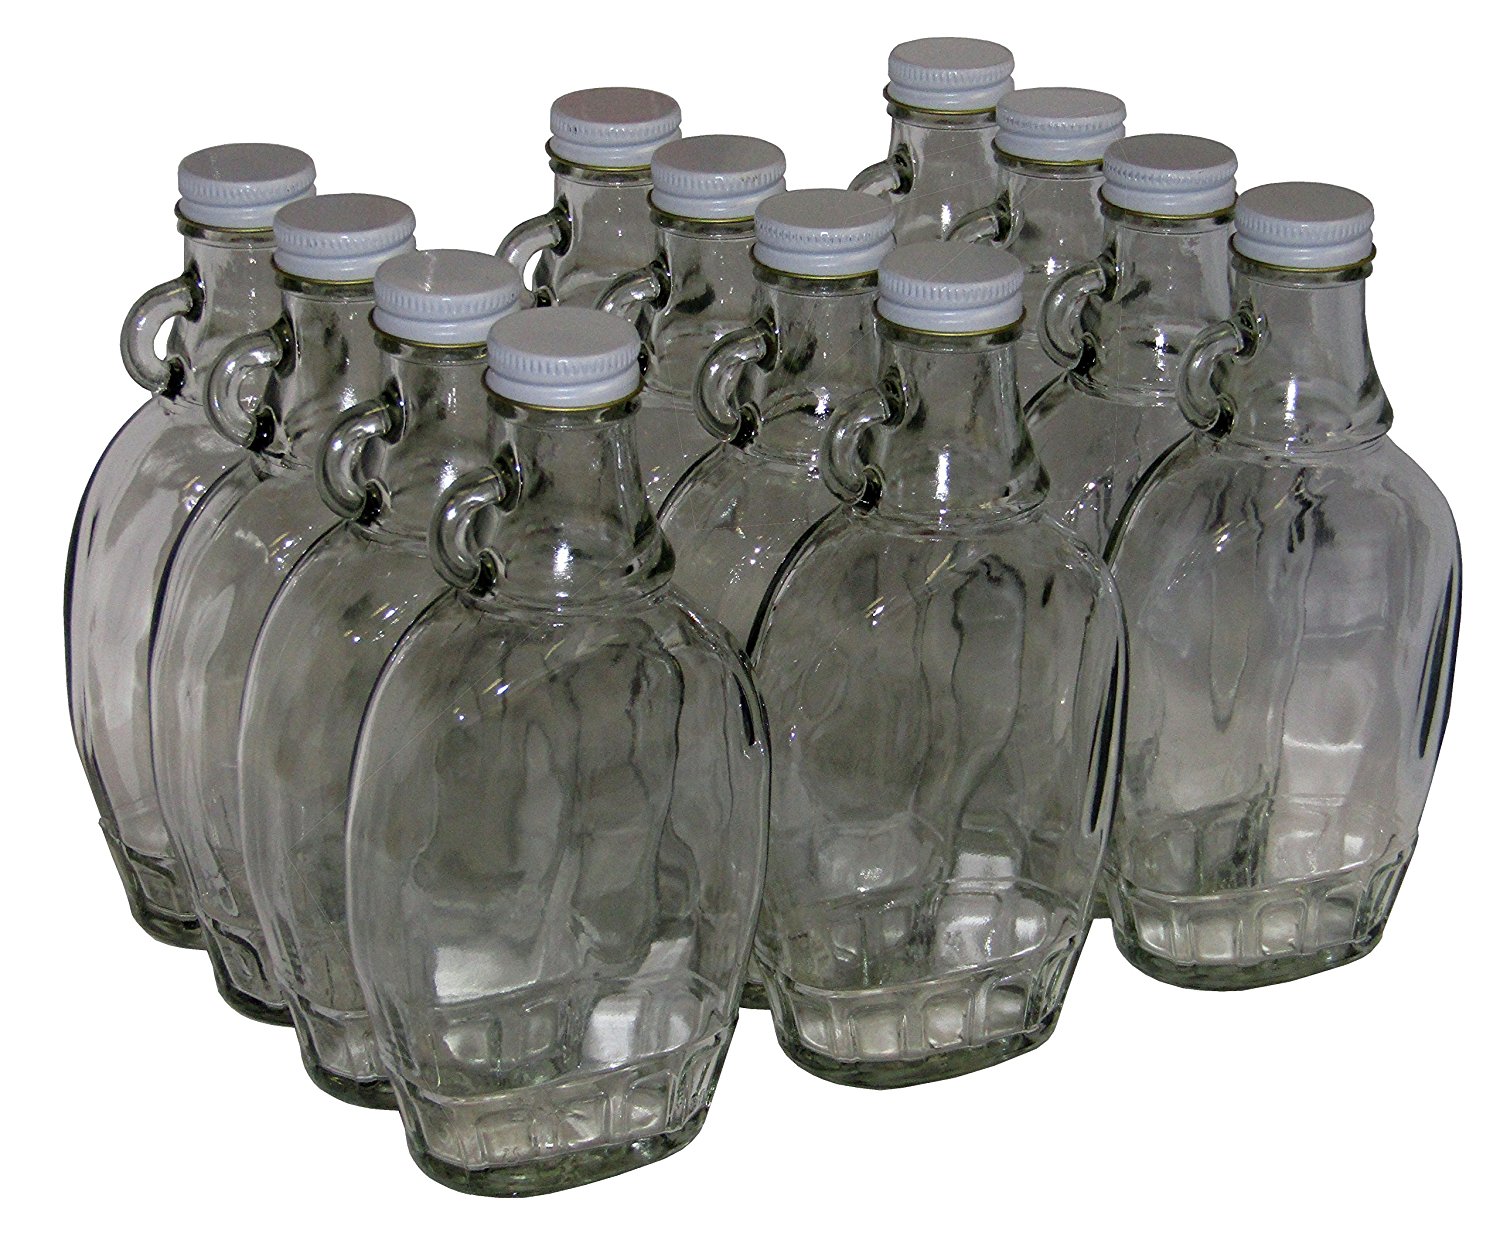 Maple Tapper Glass Maple Syrup Bottles Jars (Set of 3) with (6) Self-Sealing Caps – Reusable Leaf Shaped, Food Grade Canning Bottles 250 mL, 8.4 oz